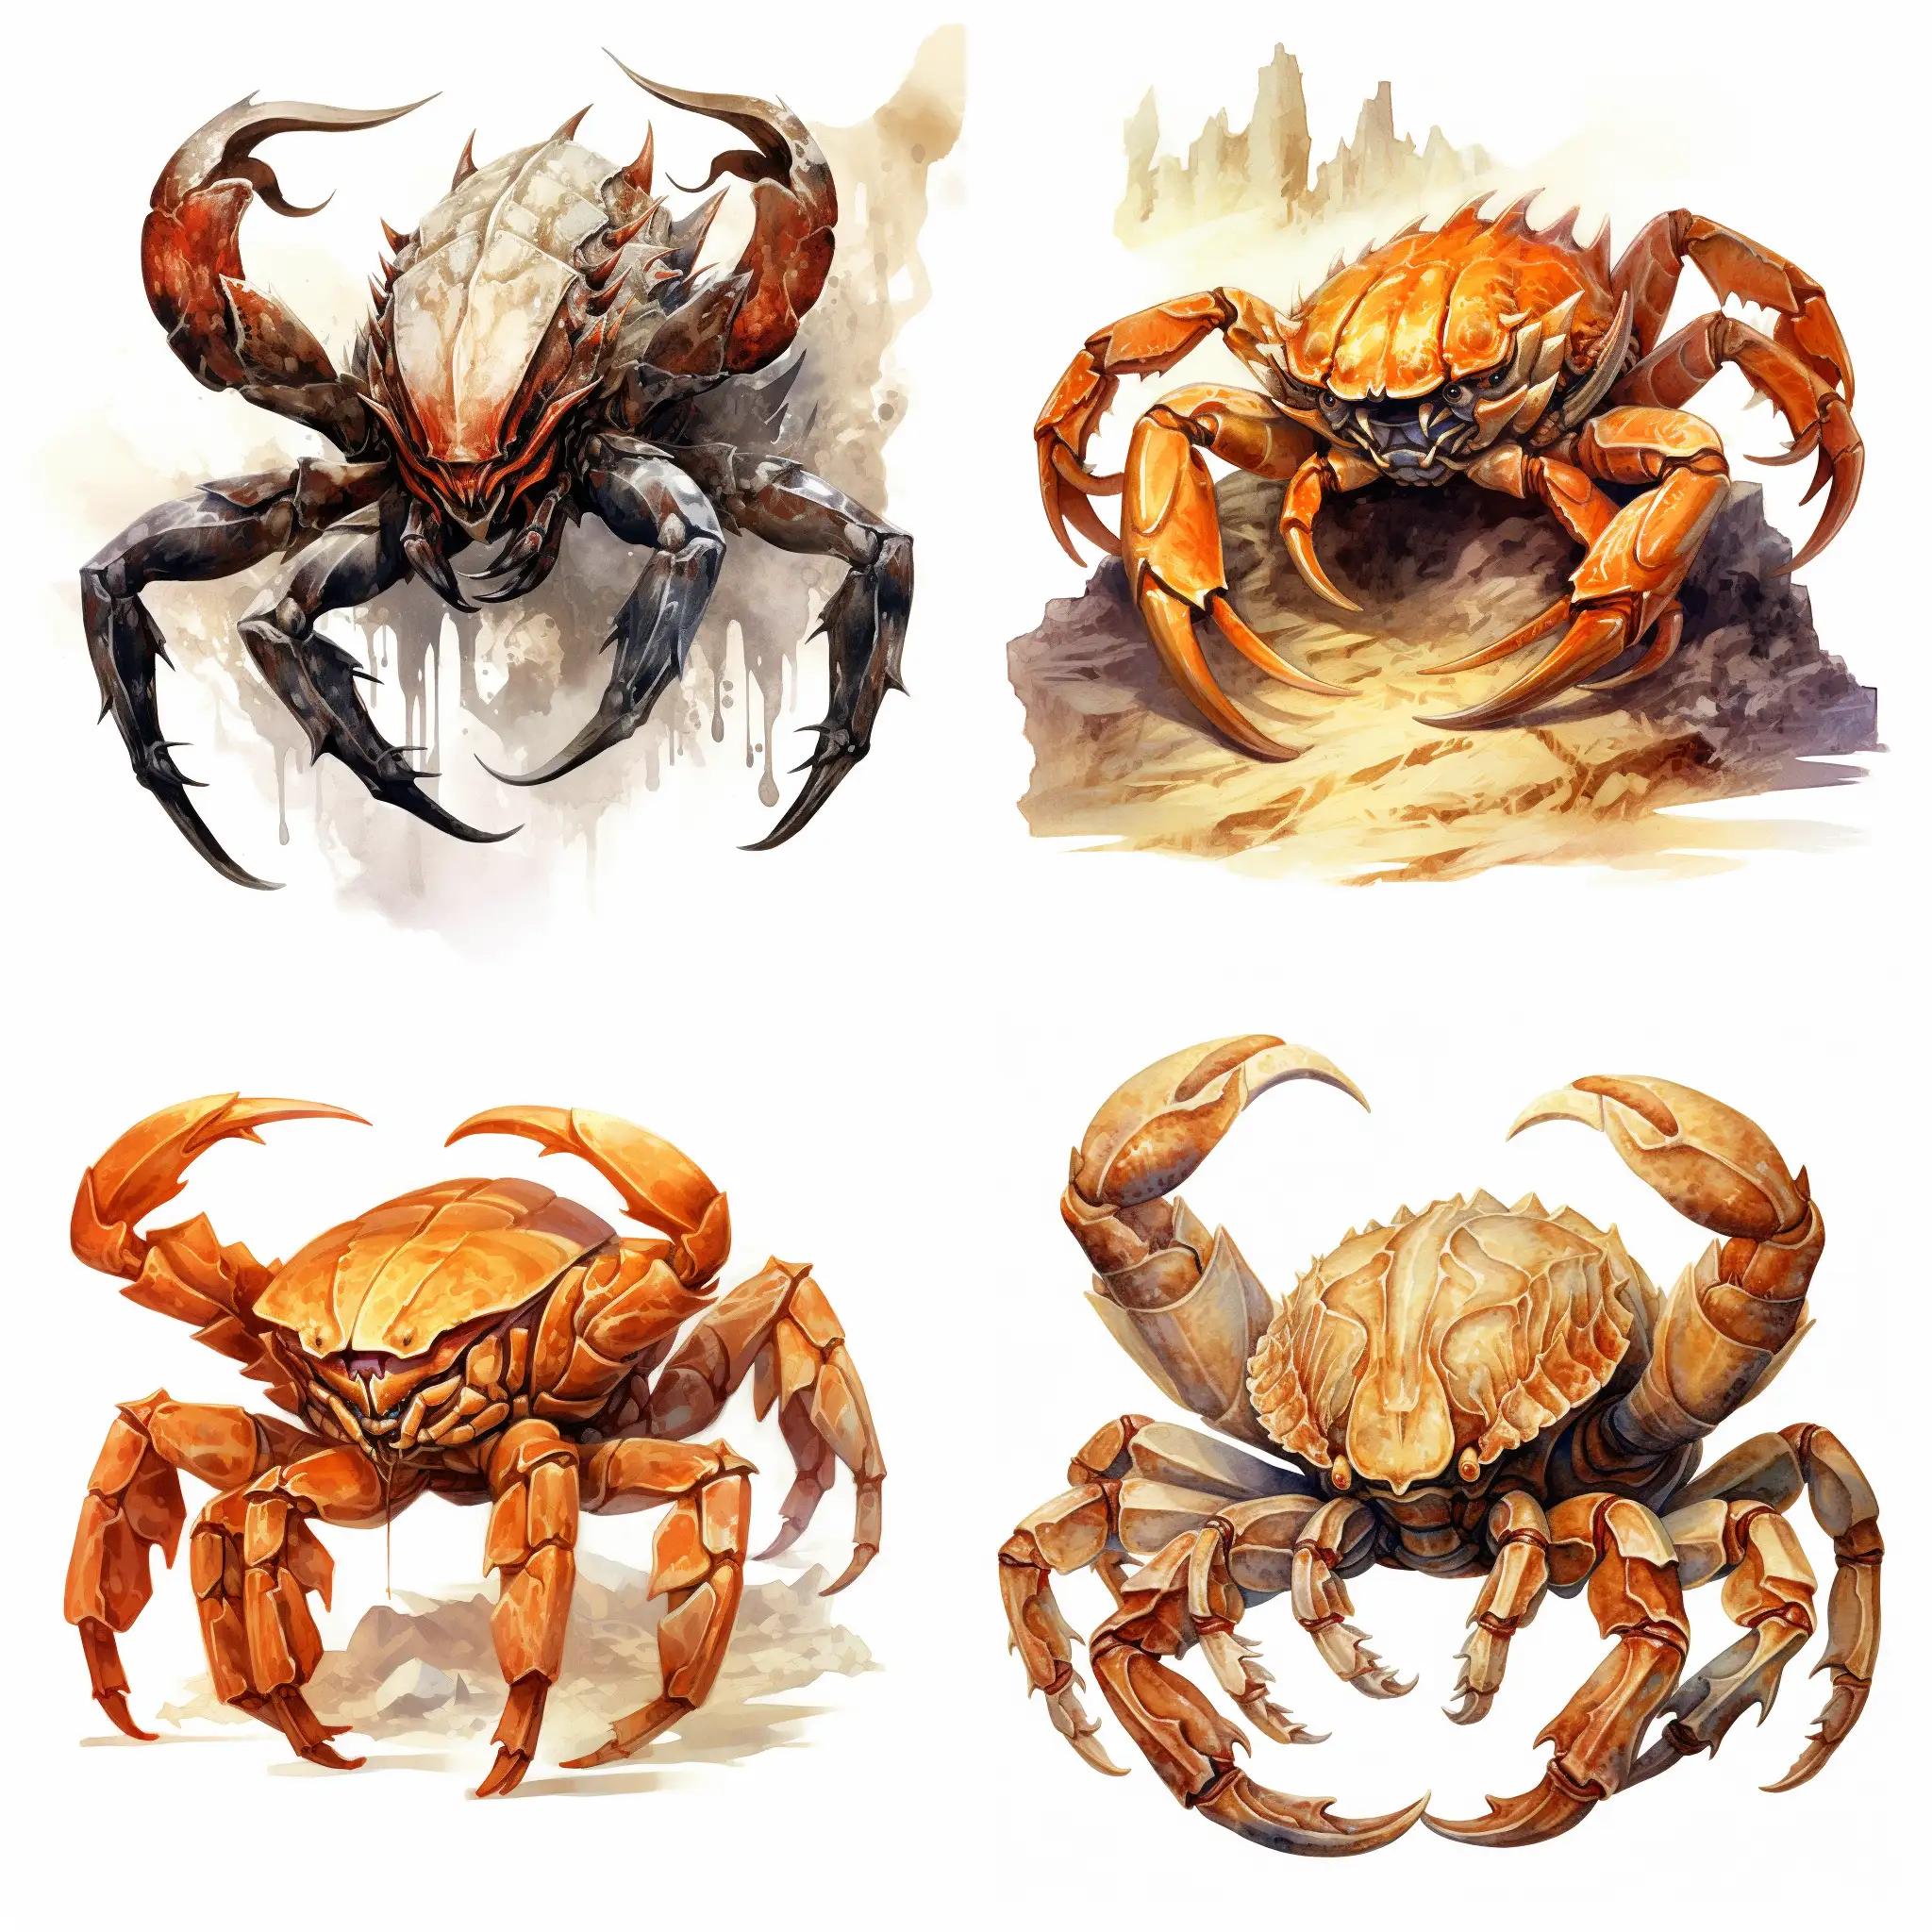 Majestic-Zodiac-Sign-Watercolor-Stunning-Depiction-of-Scorpion-Arthropod